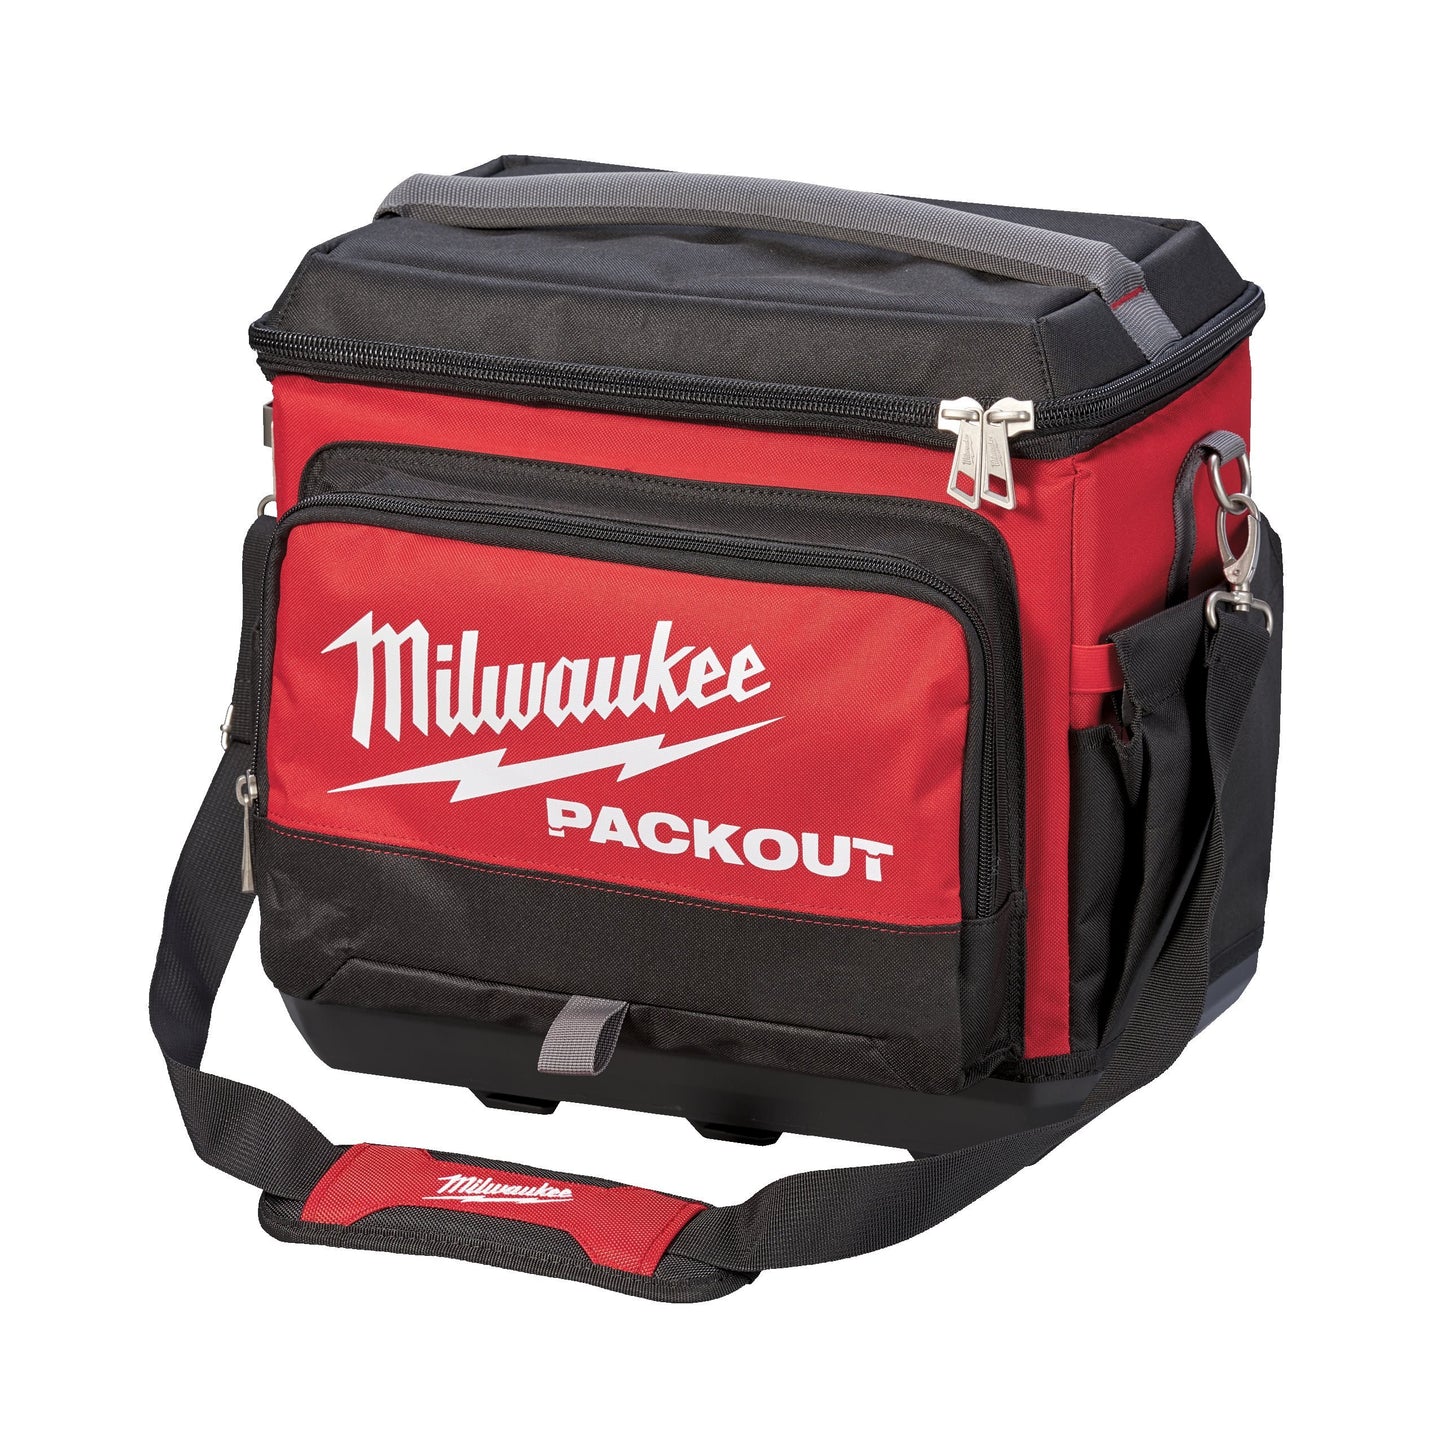 Kylväska Milwaukee Packout™ Kylväska